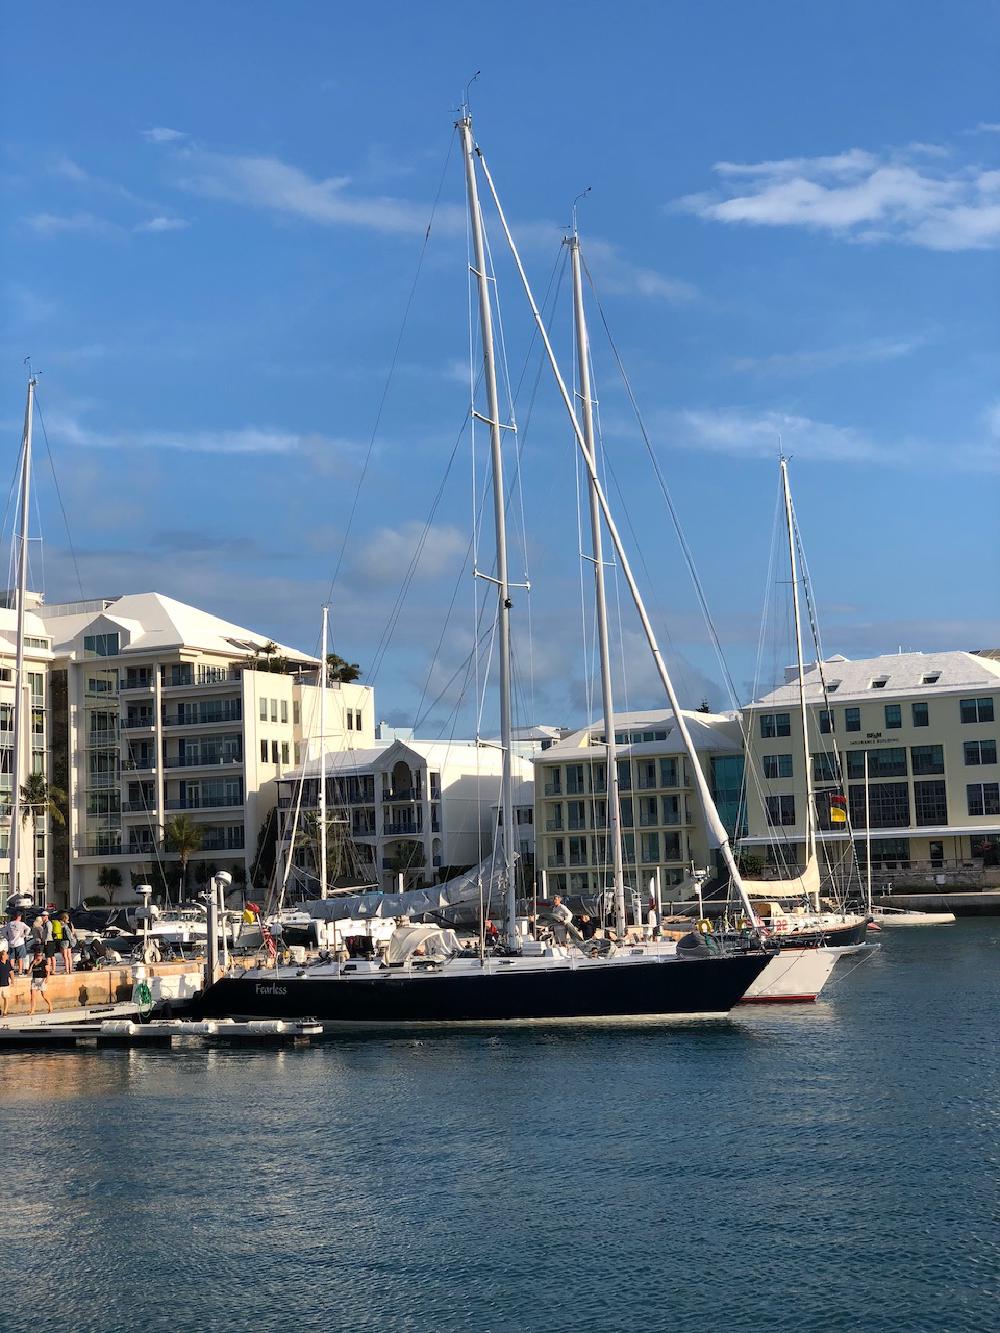 Fearless docked at the Royal Bermuda Yacht Club